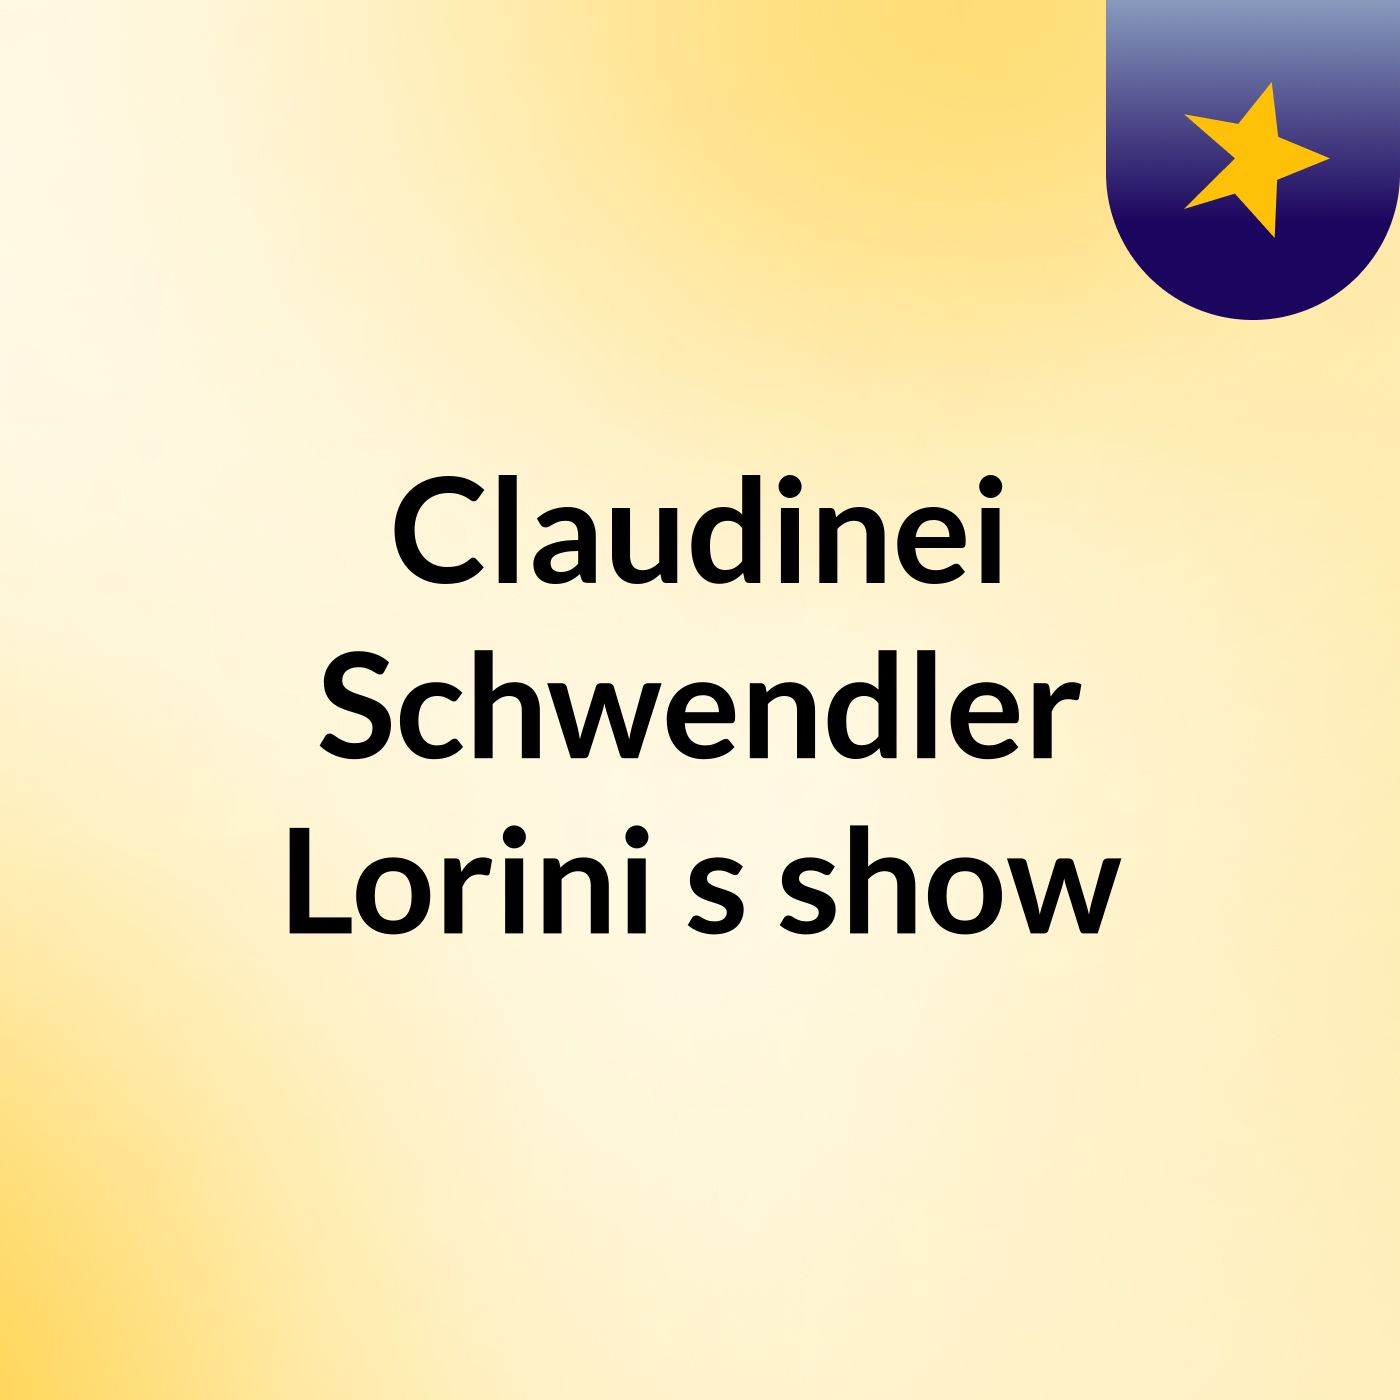 Claudinei Schwendler Lorini's show